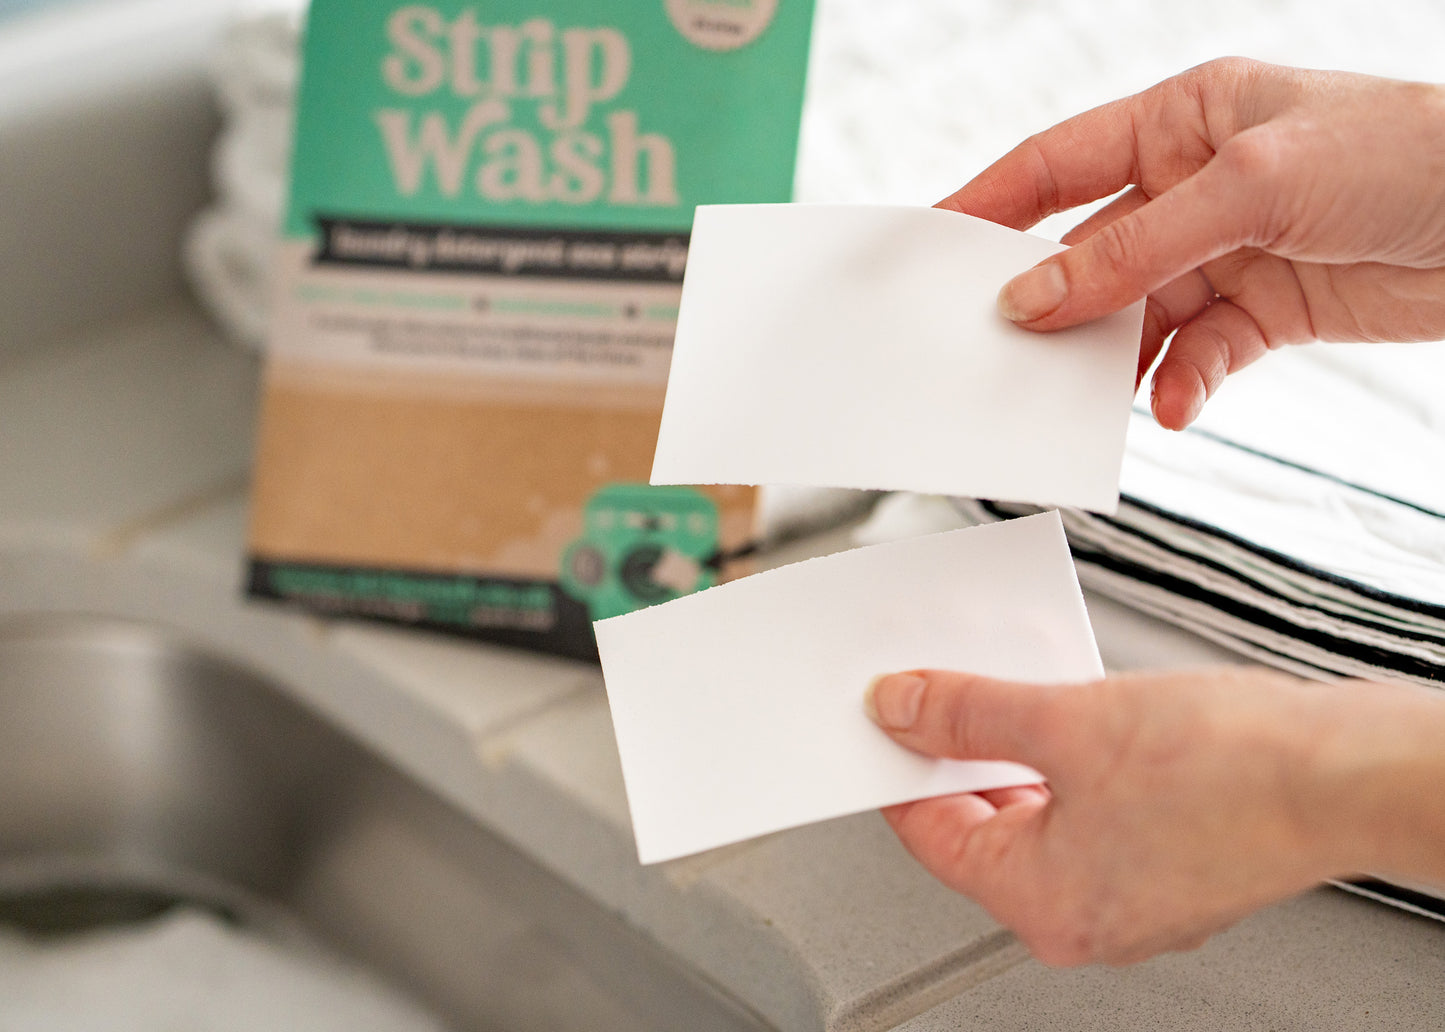 Strip Wash Plastic Free Laundry Detergent Eco Strips - 24 Strips COTTON FRESH